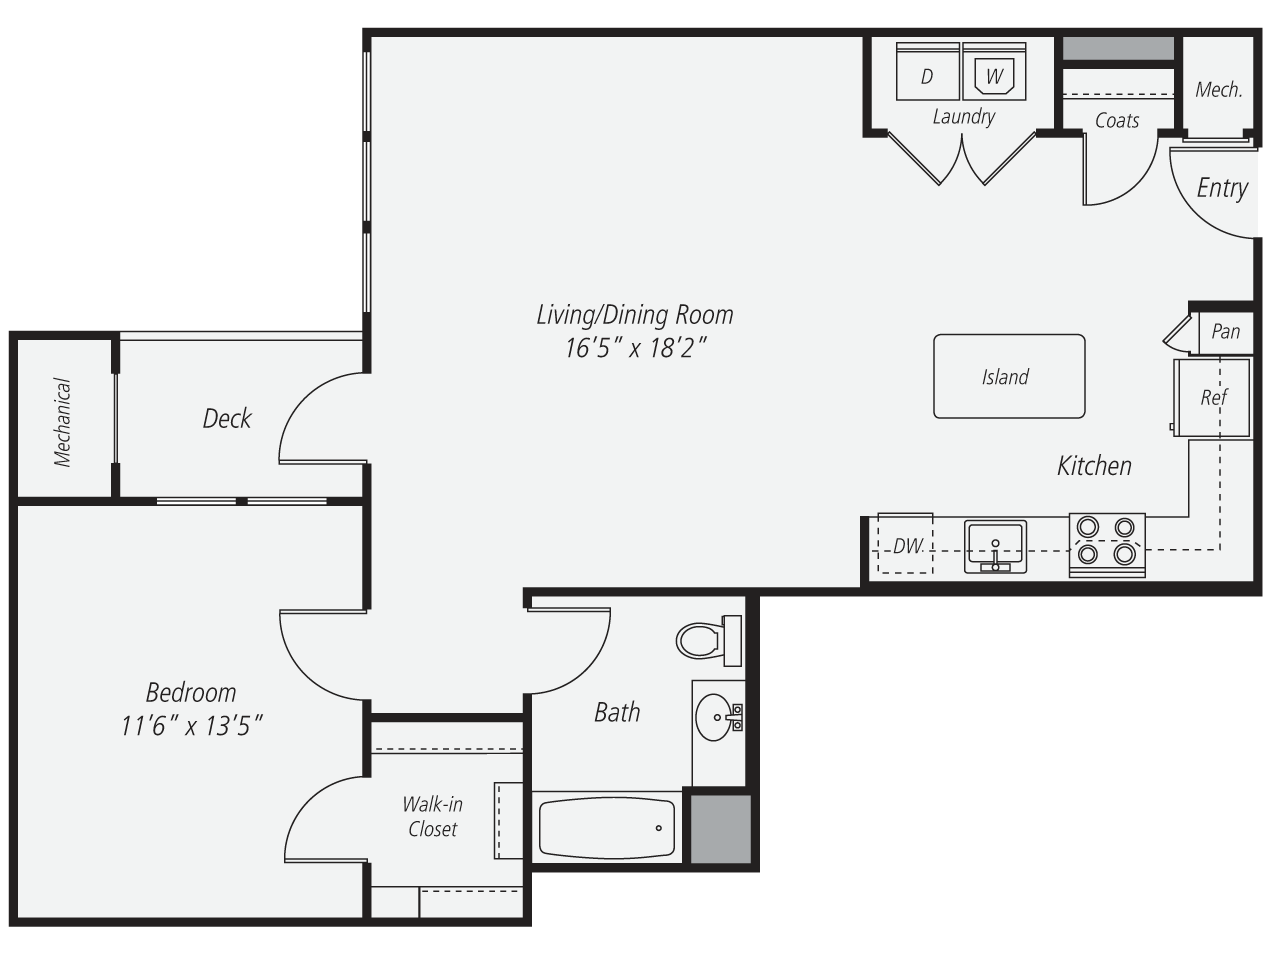 Floorplan for Apartment #421, 1 bedroom unit at Halstead Norwalk